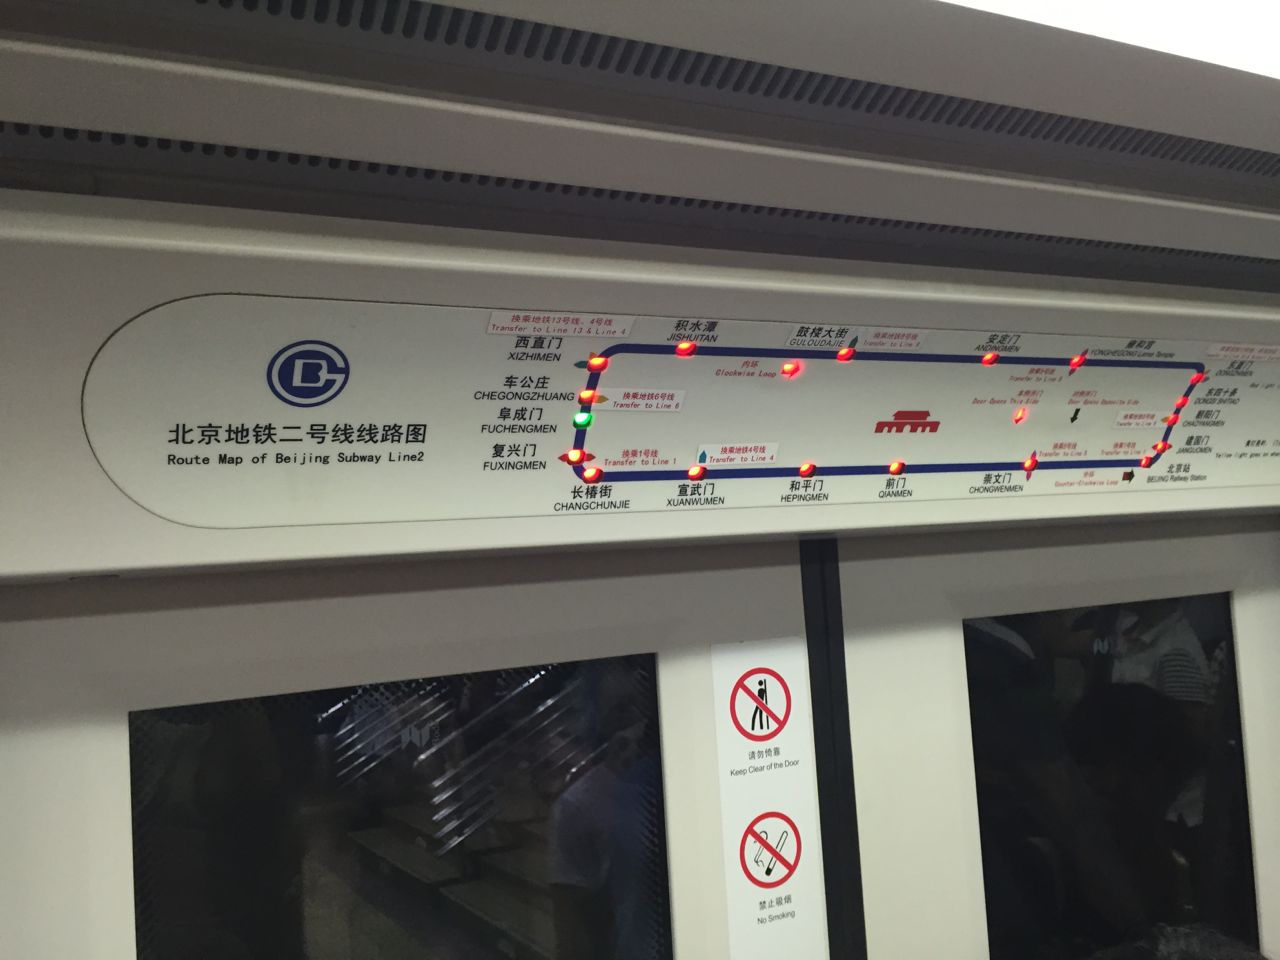 Beijing subway route map